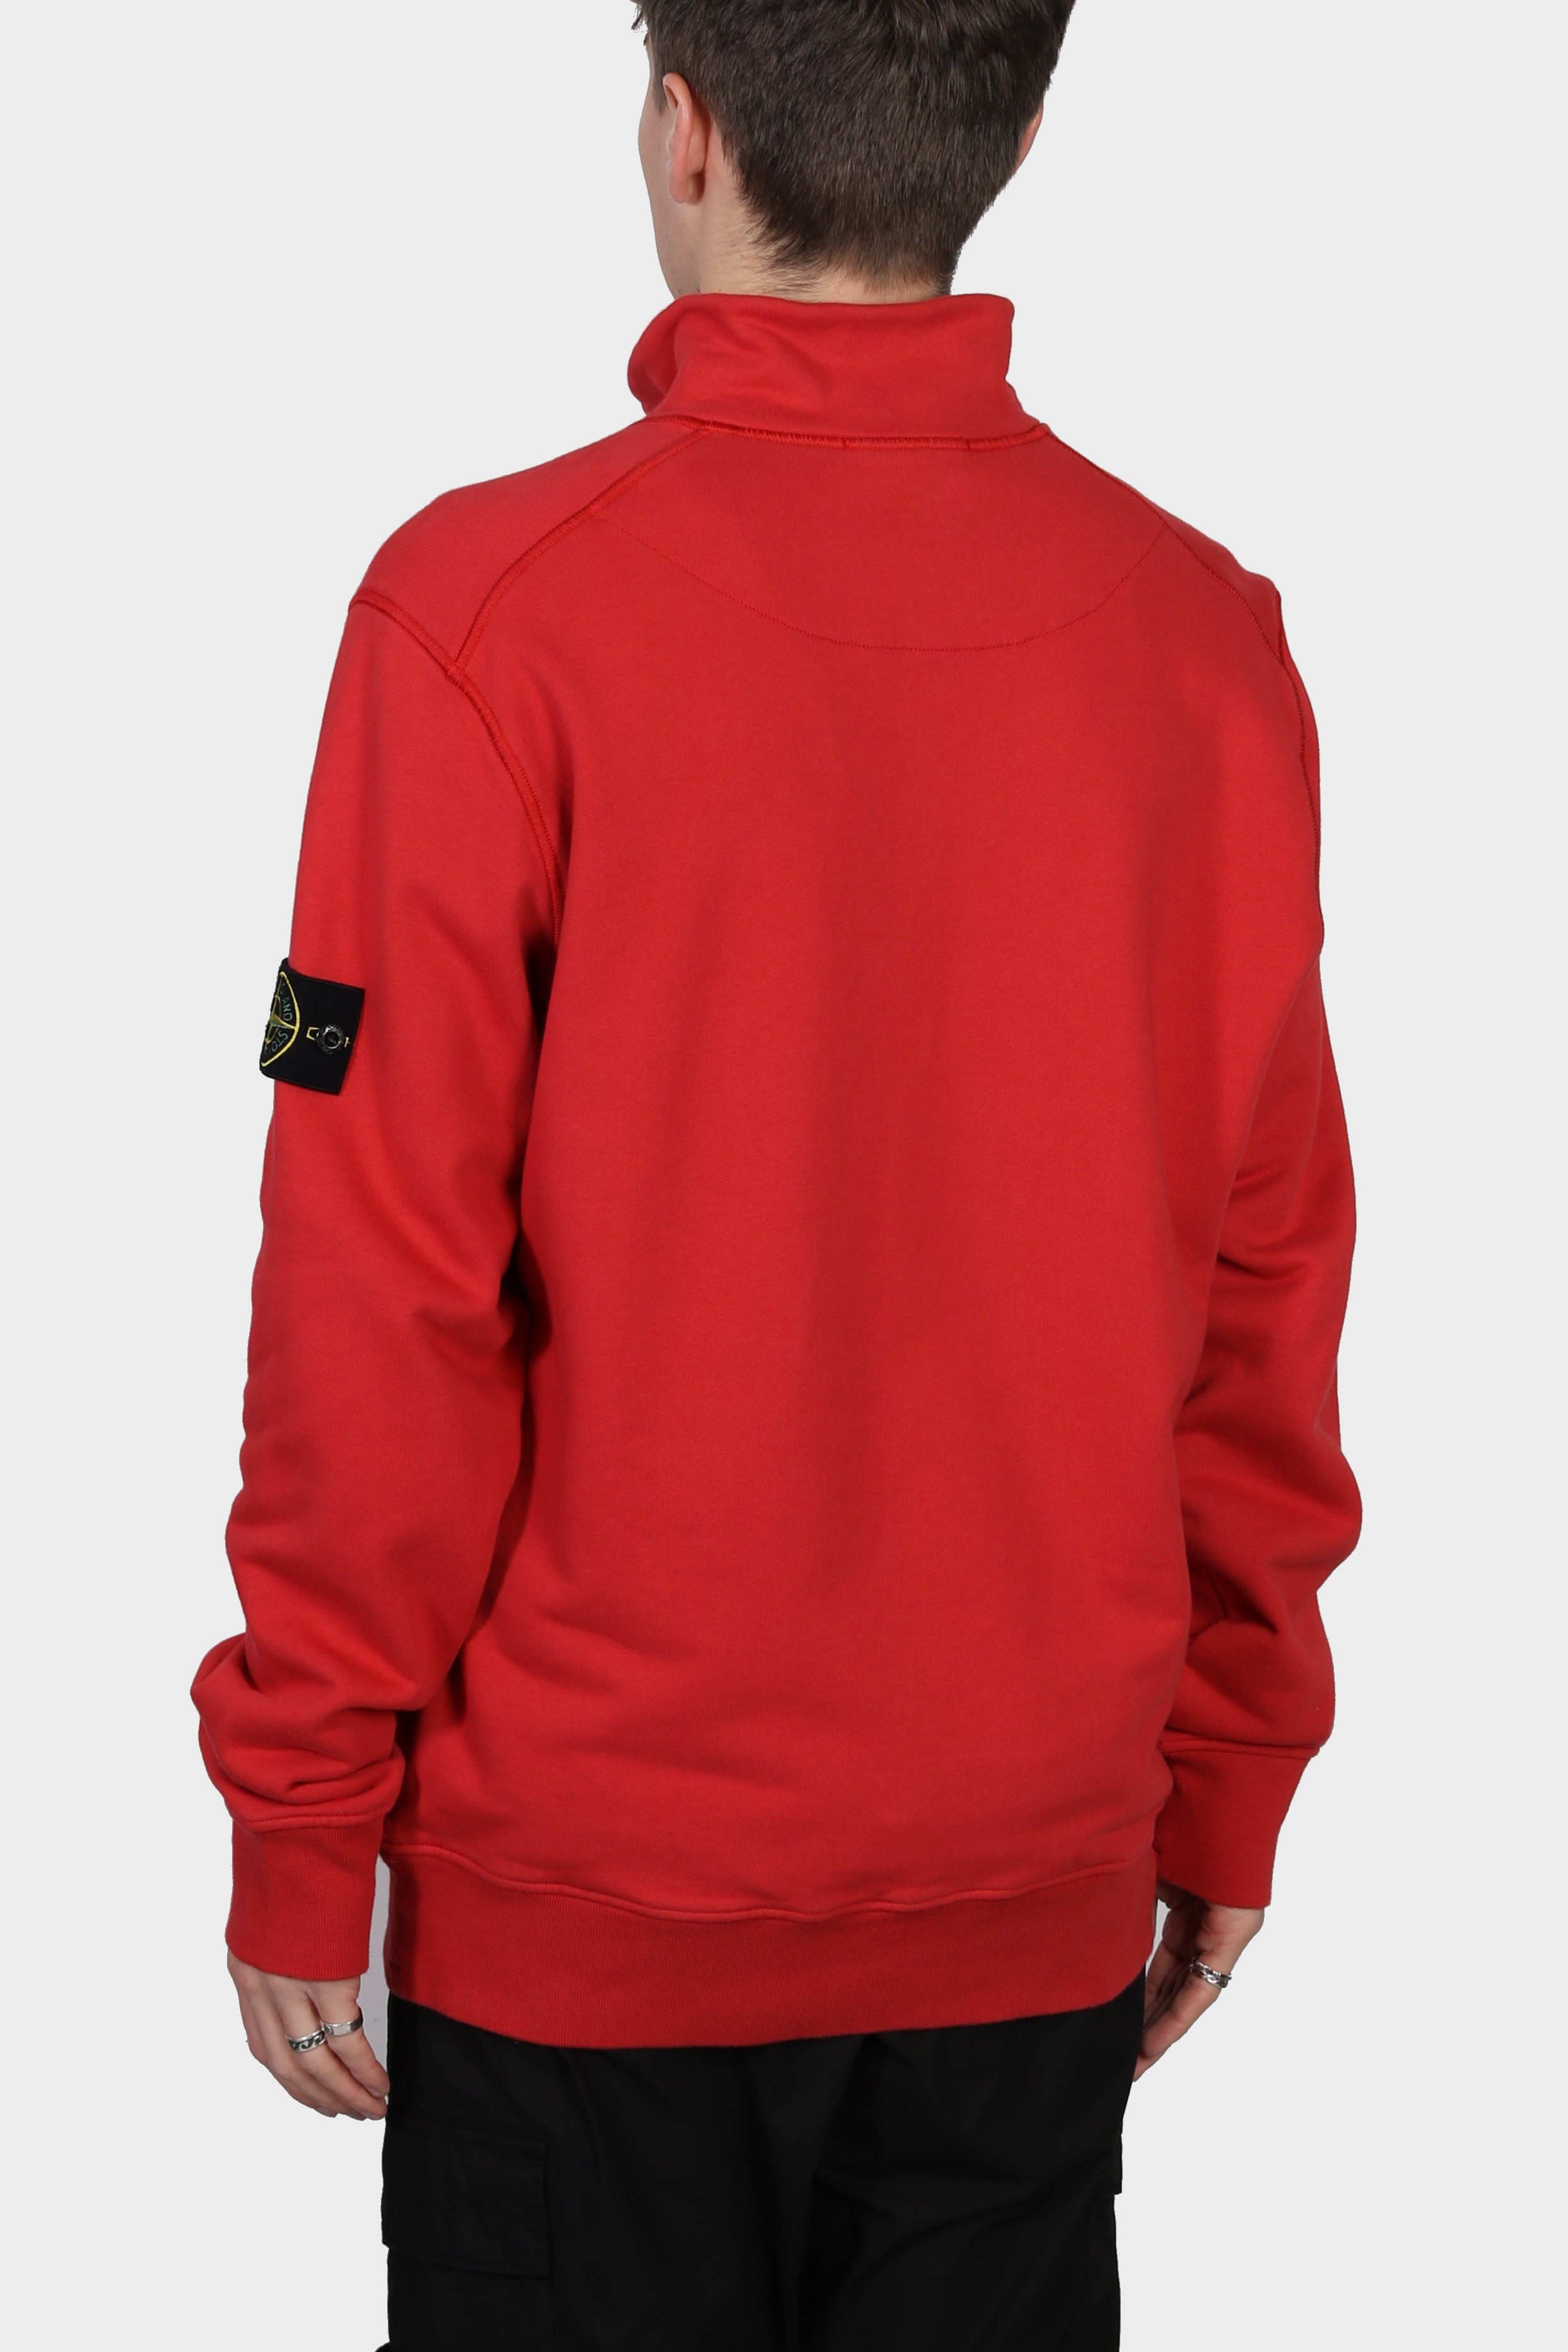 STONE ISLAND Half Zip Sweatshirt in Red 2XL